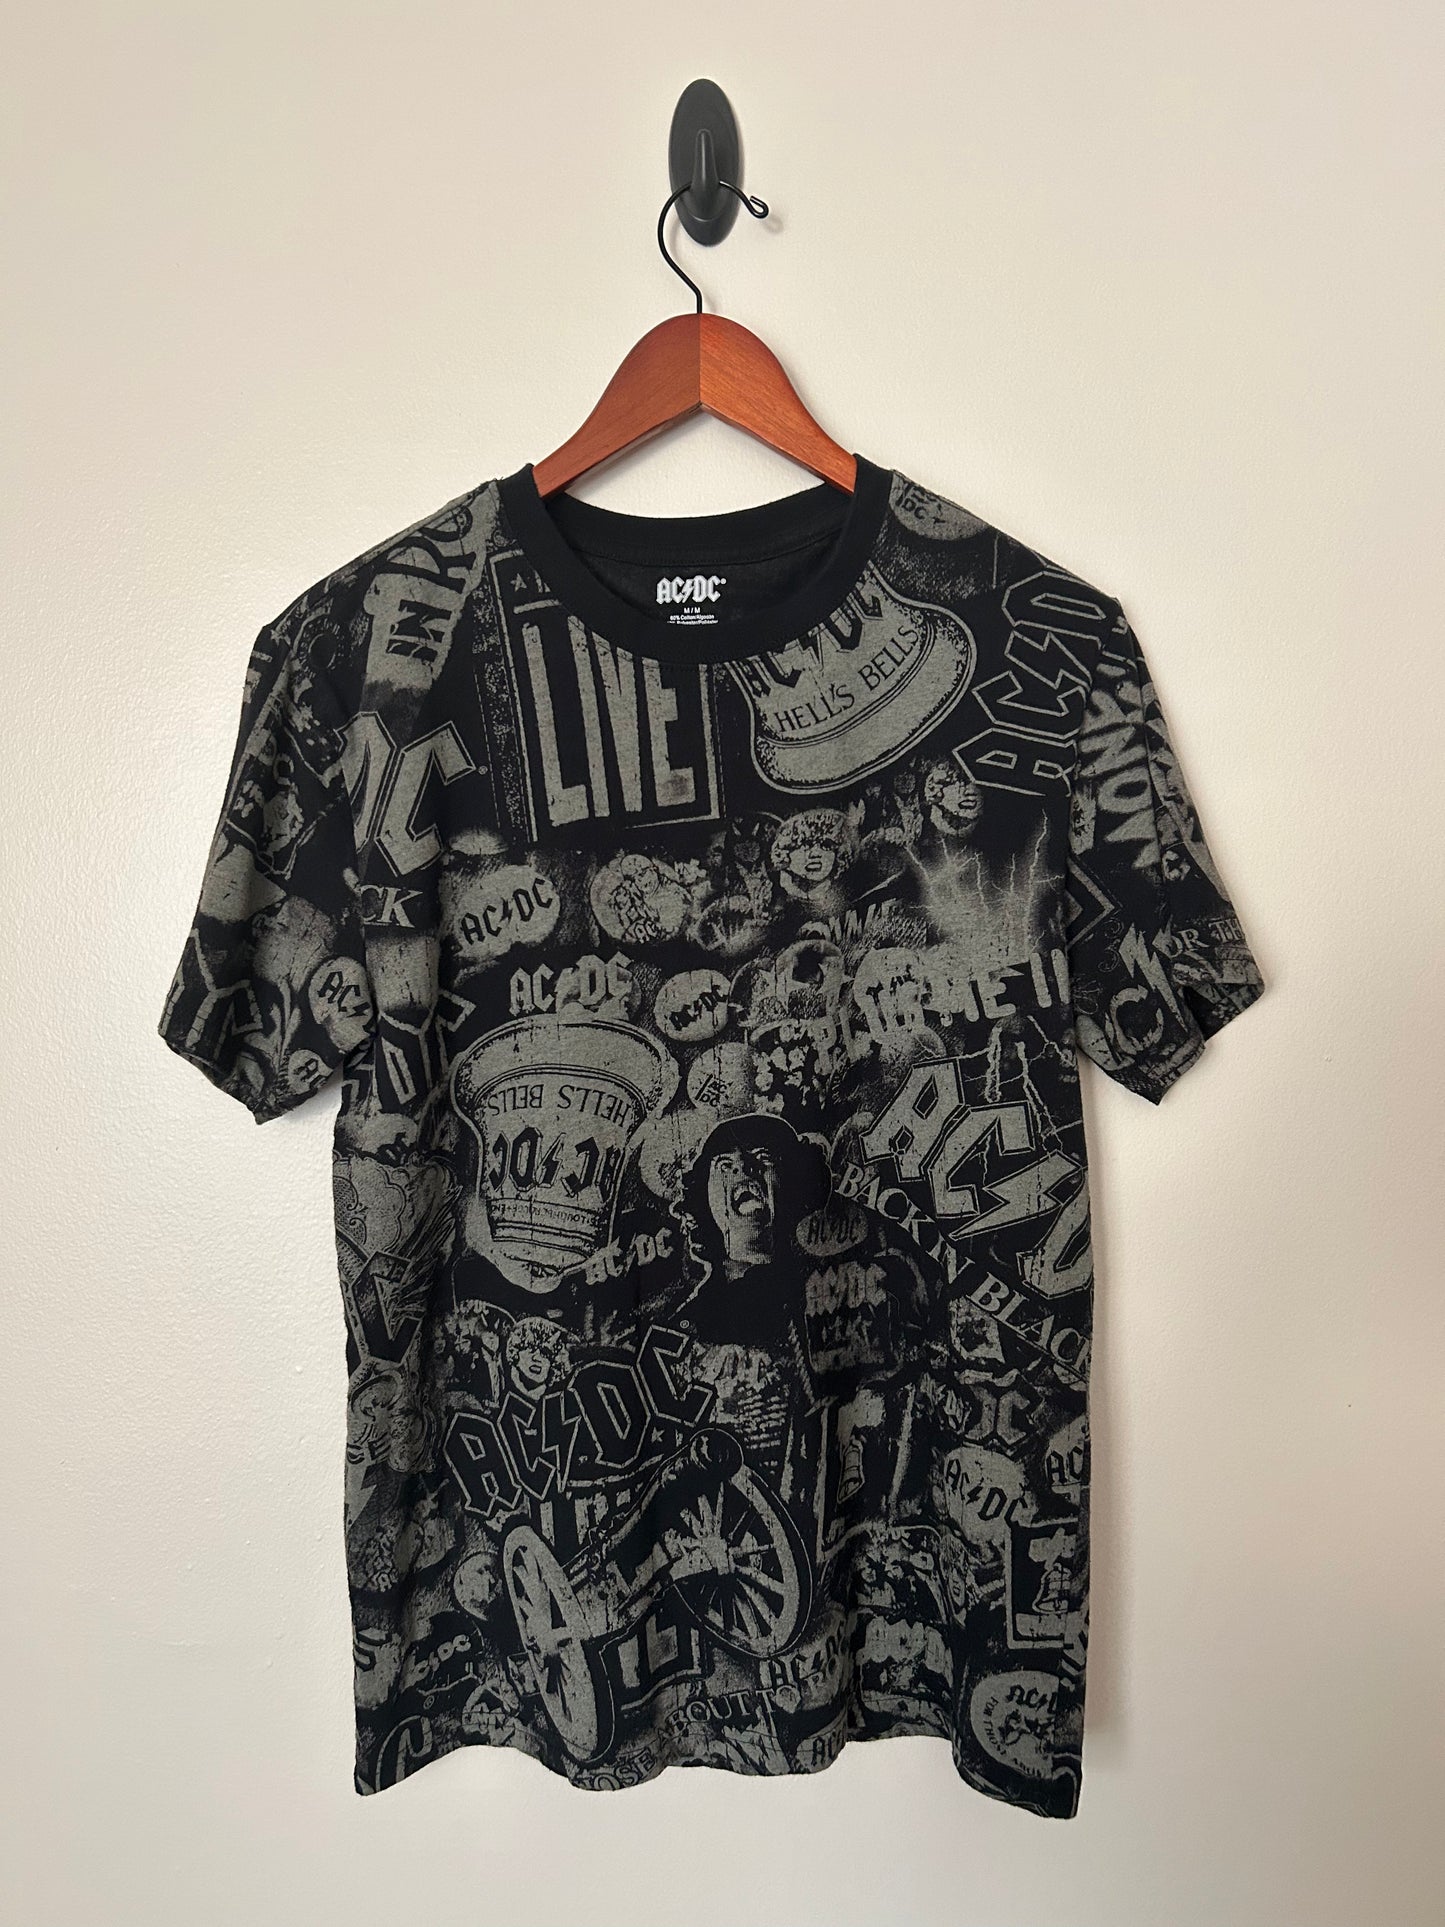 AC/DC Hells Bells/Back in Black Graphic T-Shirt - M